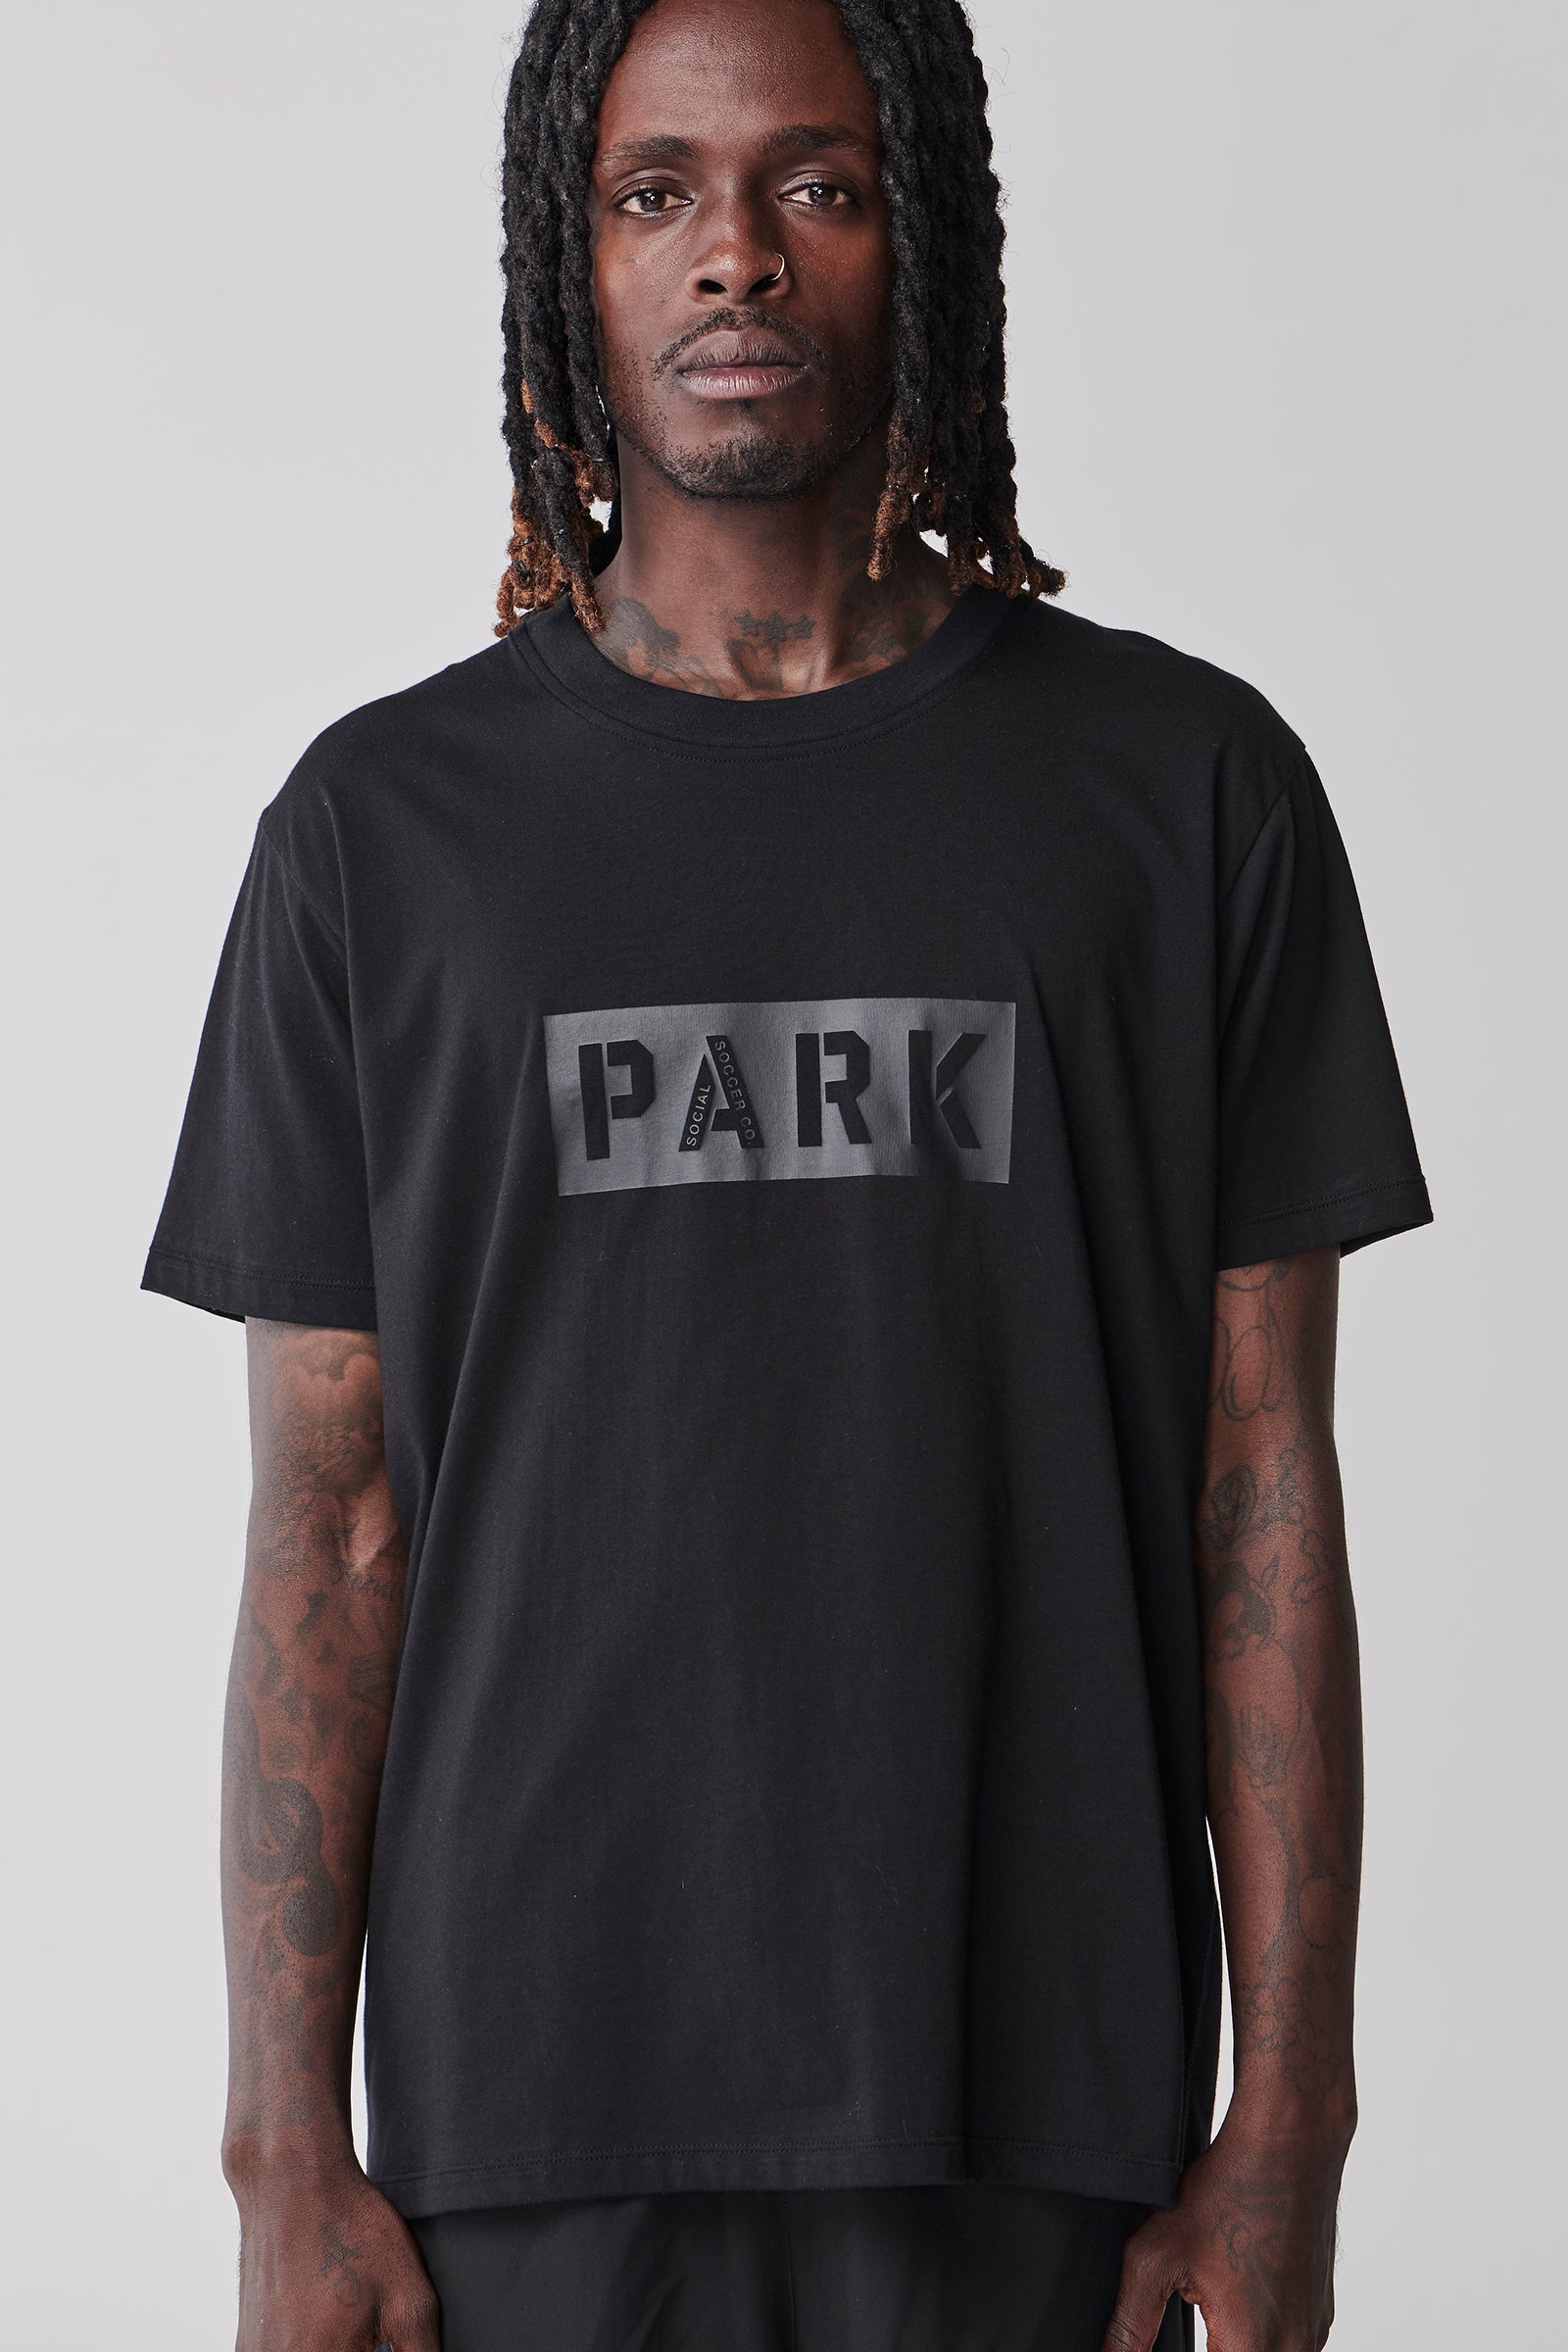 PARK T Shirt - Black